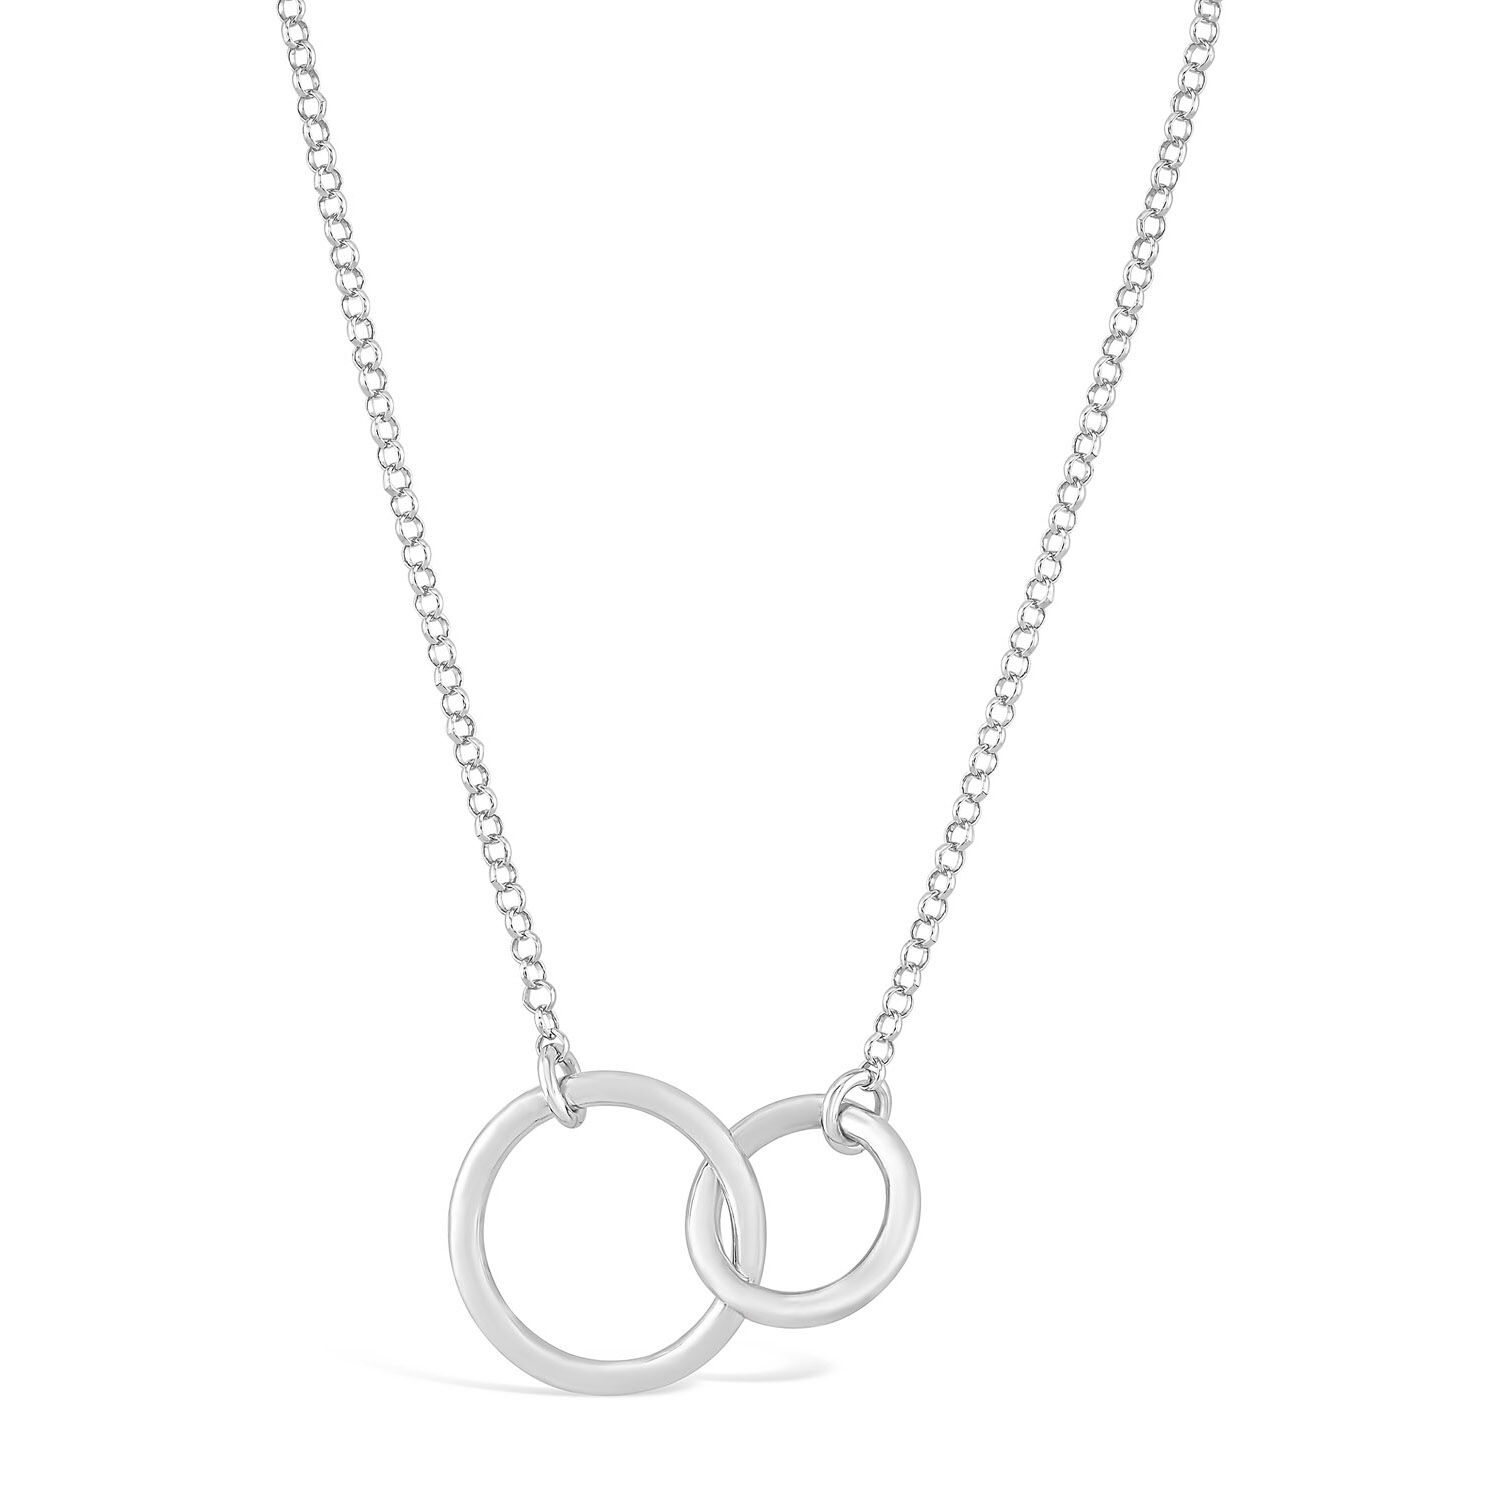 Rose Goldtone Silver Interlocking Circle Rings Necklace 16 - 18 in